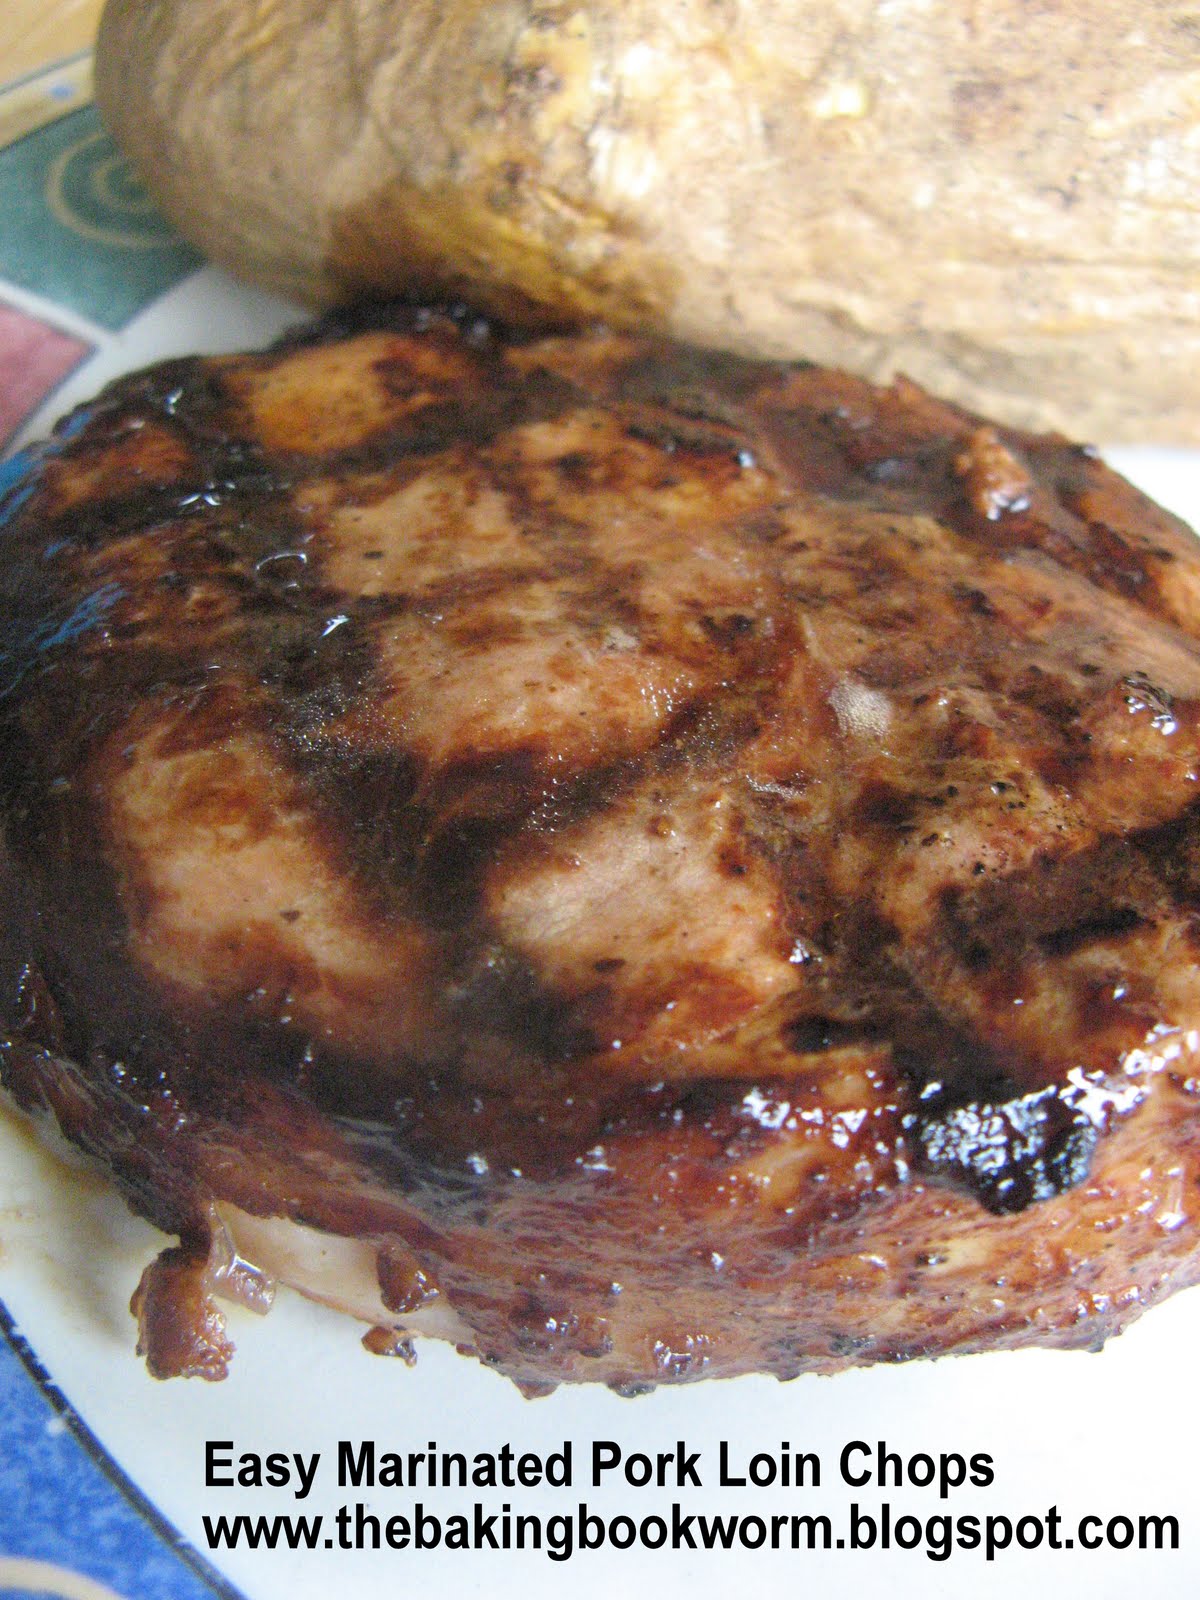 The Baking Bookworm: Easy Marinated Pork Loin Chops